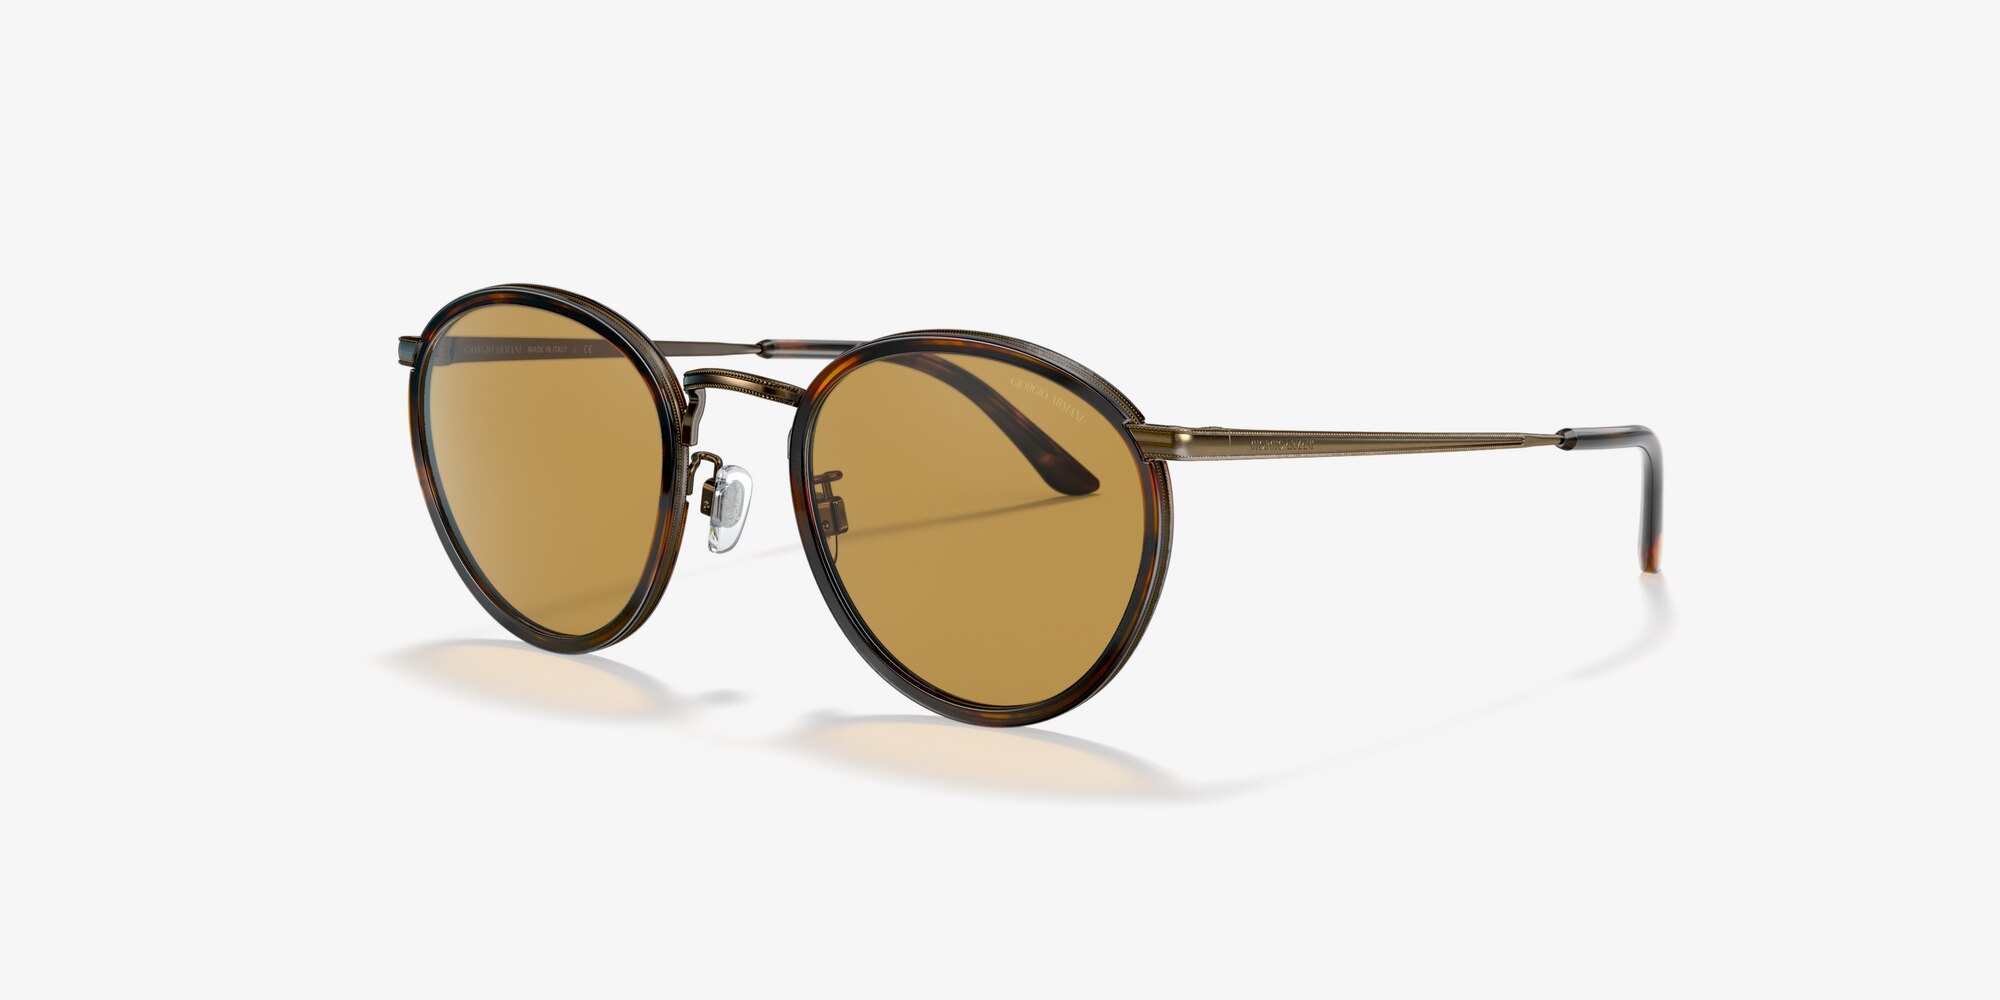 Polarized Sunglasses Pilot Clip on Reflective Aviator Hidden Metal Clip 7Colors 